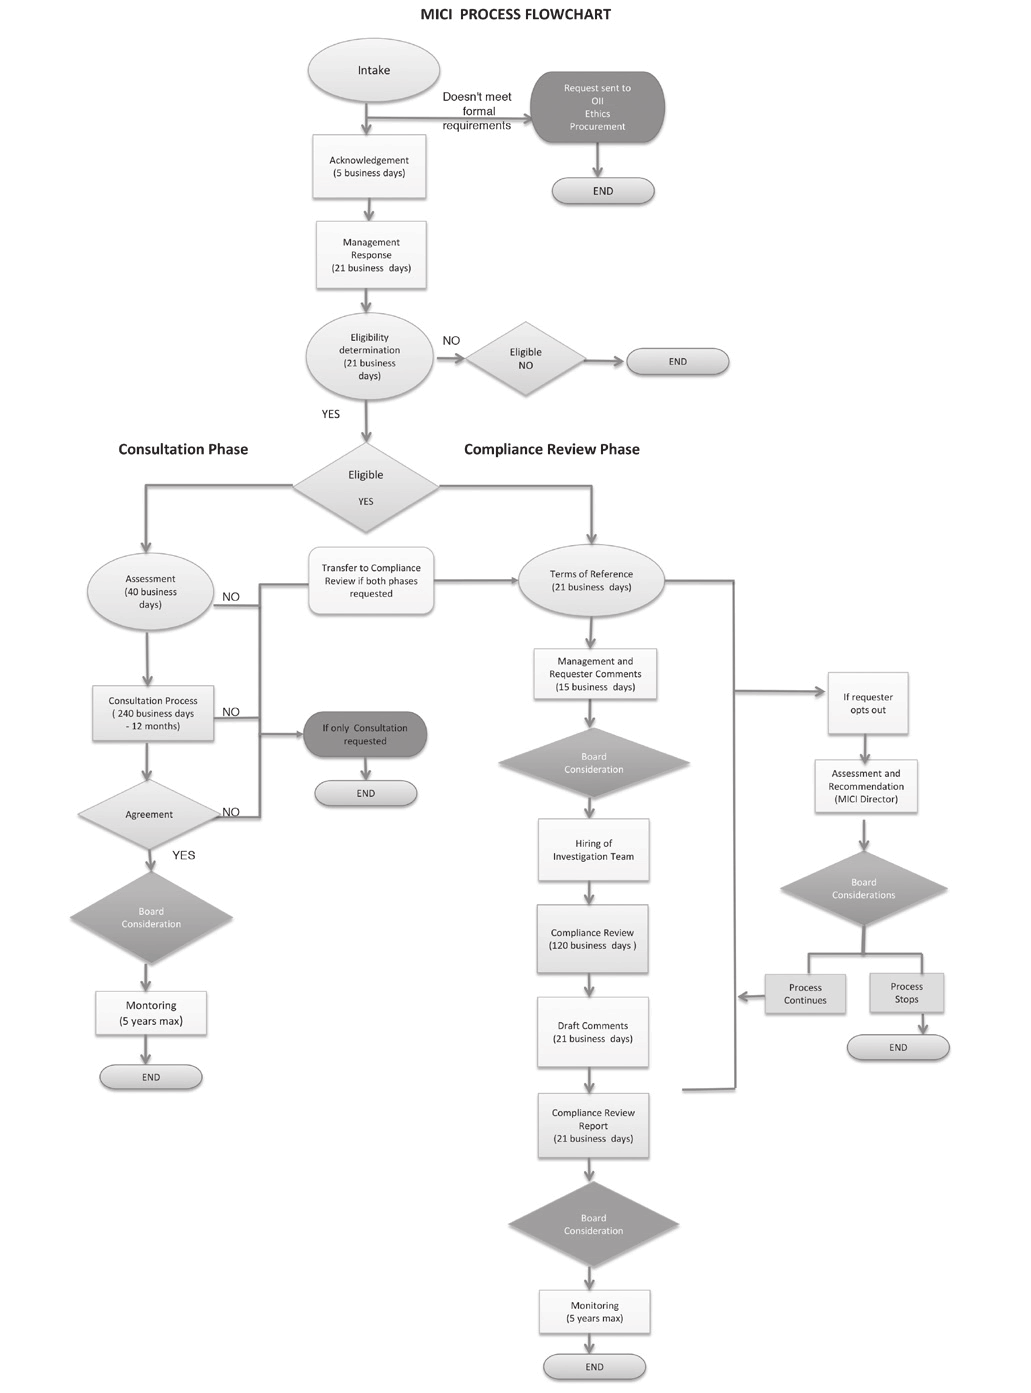 MICI Process Flowchart